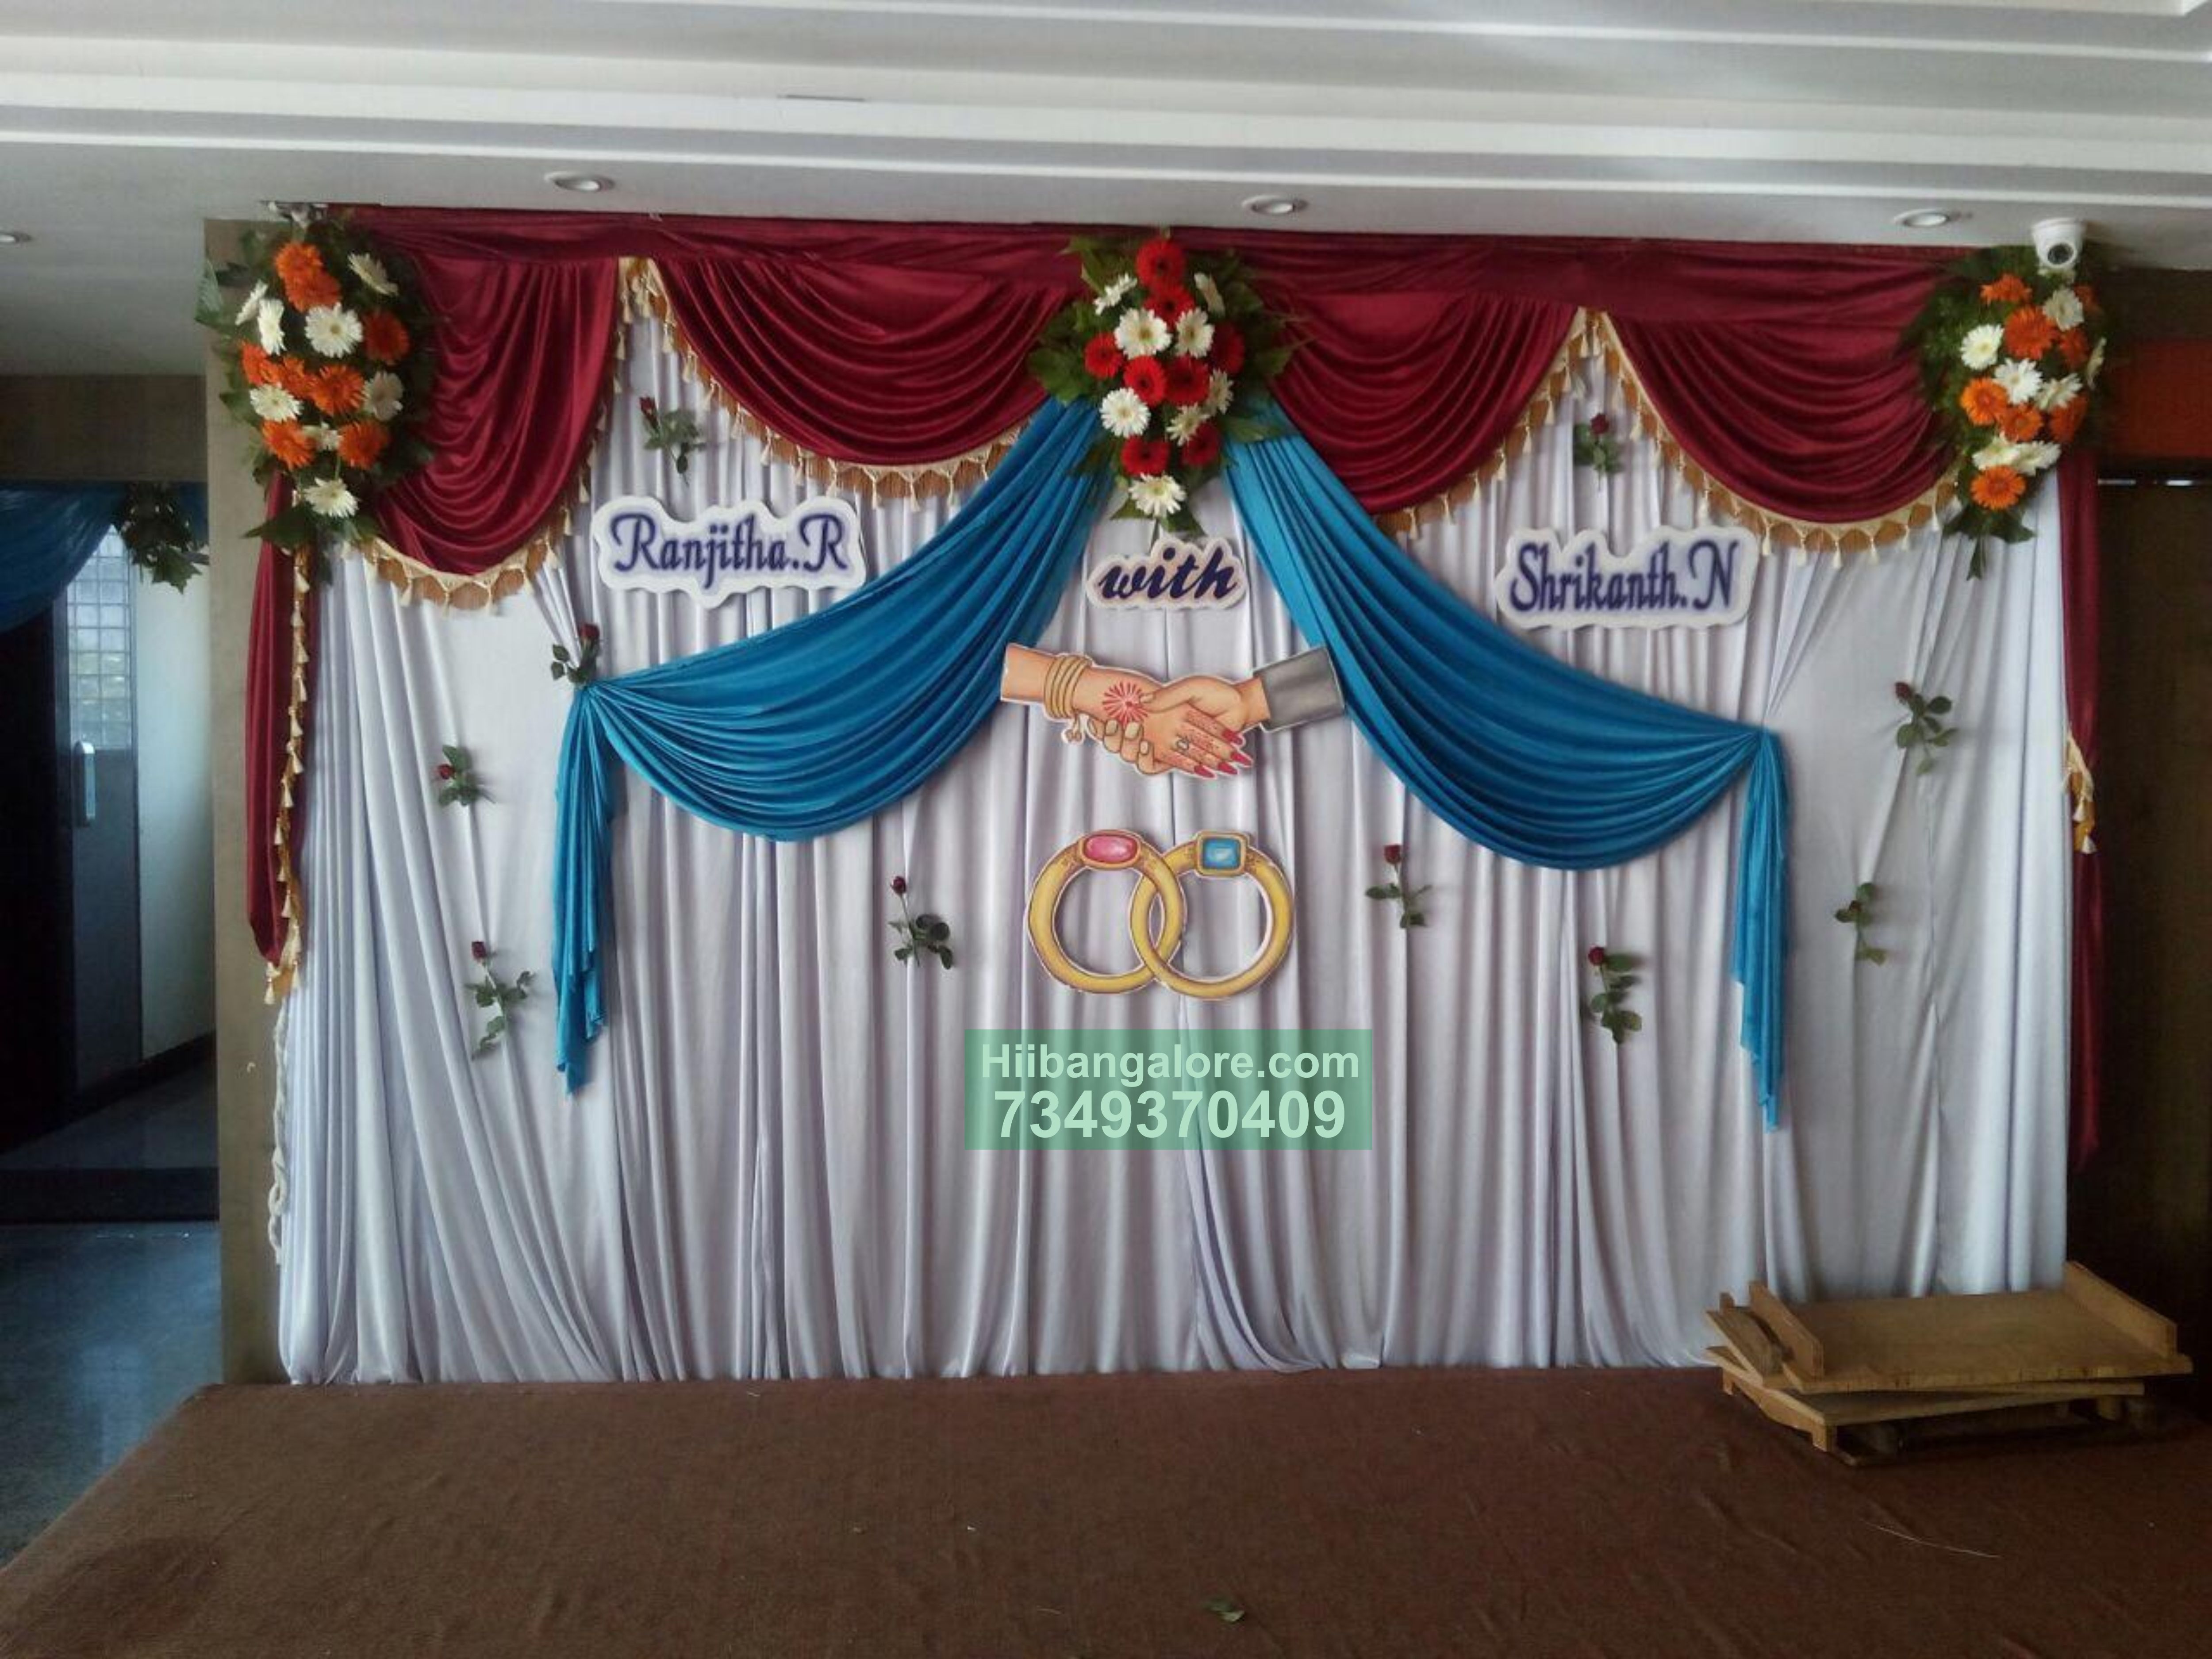 JMD Decorations - Wedding Services